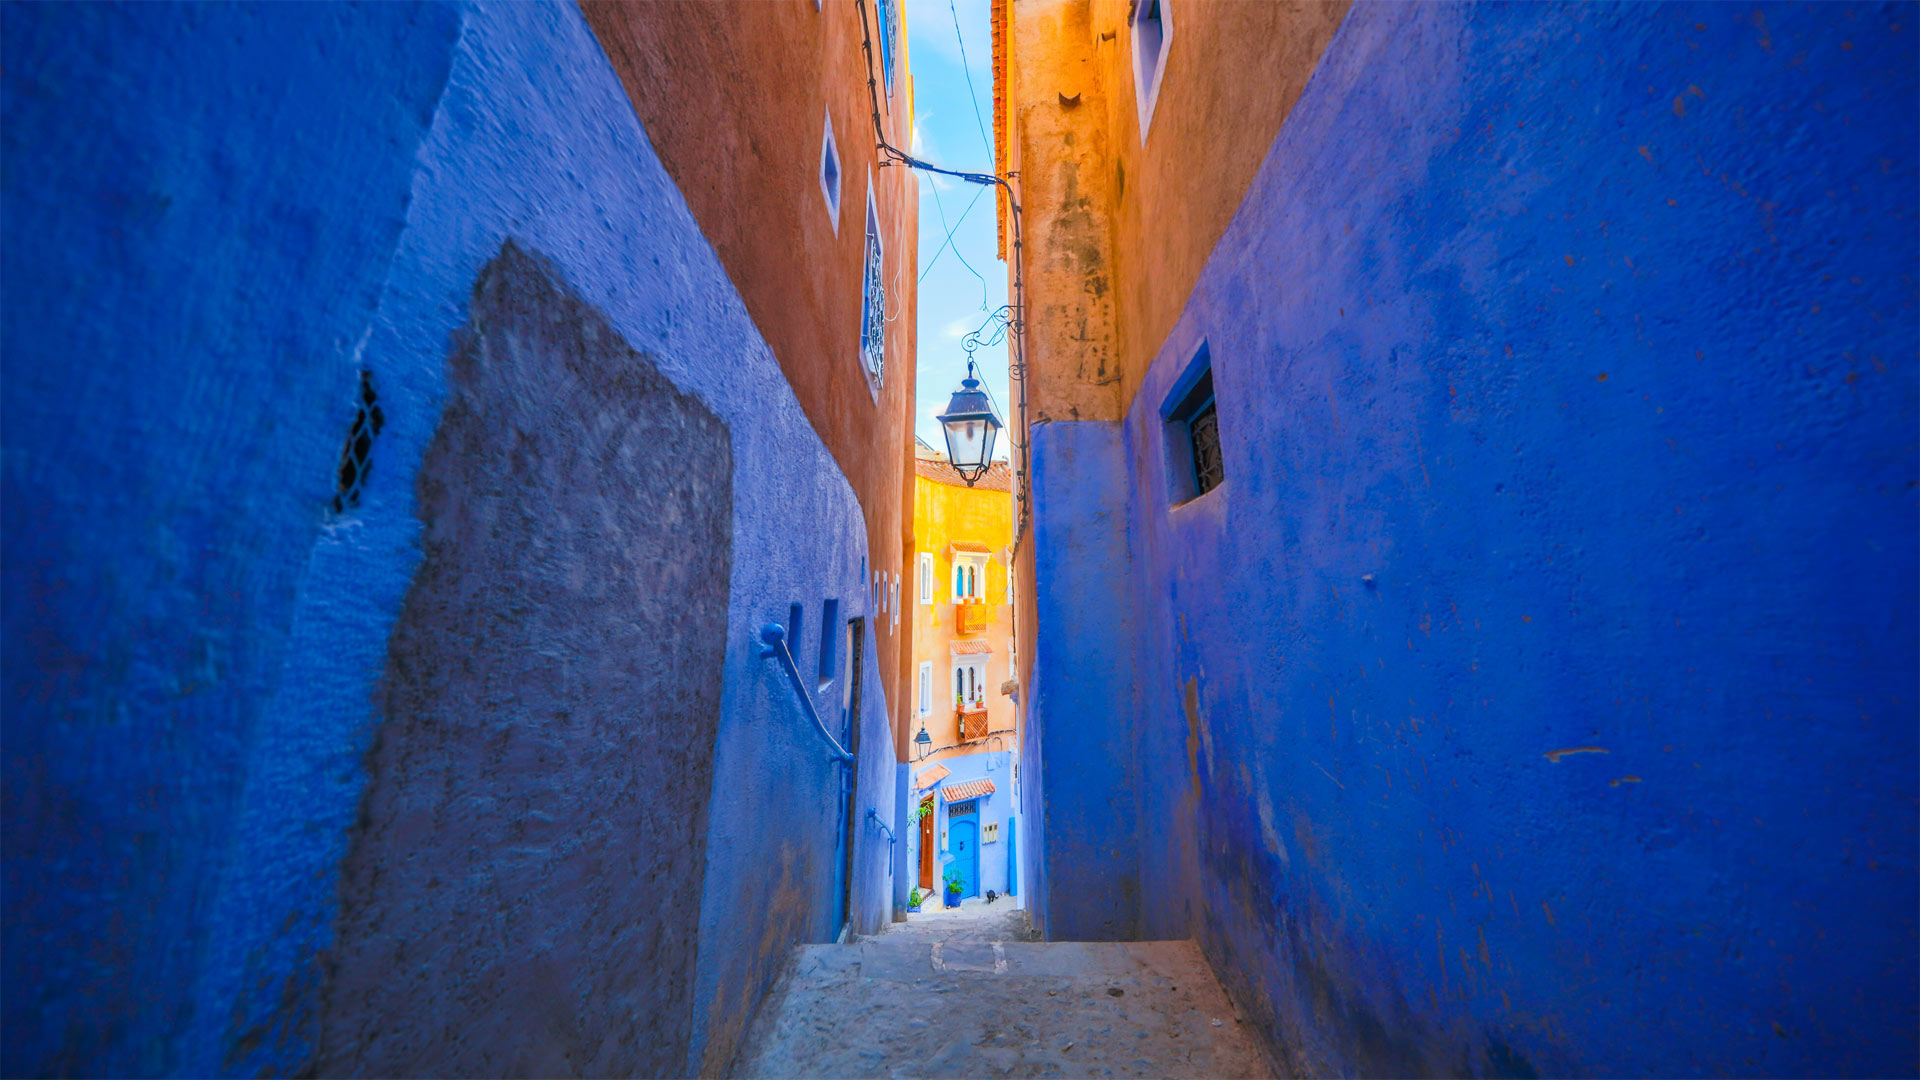 General 1920x1080 Morocco city building street blue alleyway